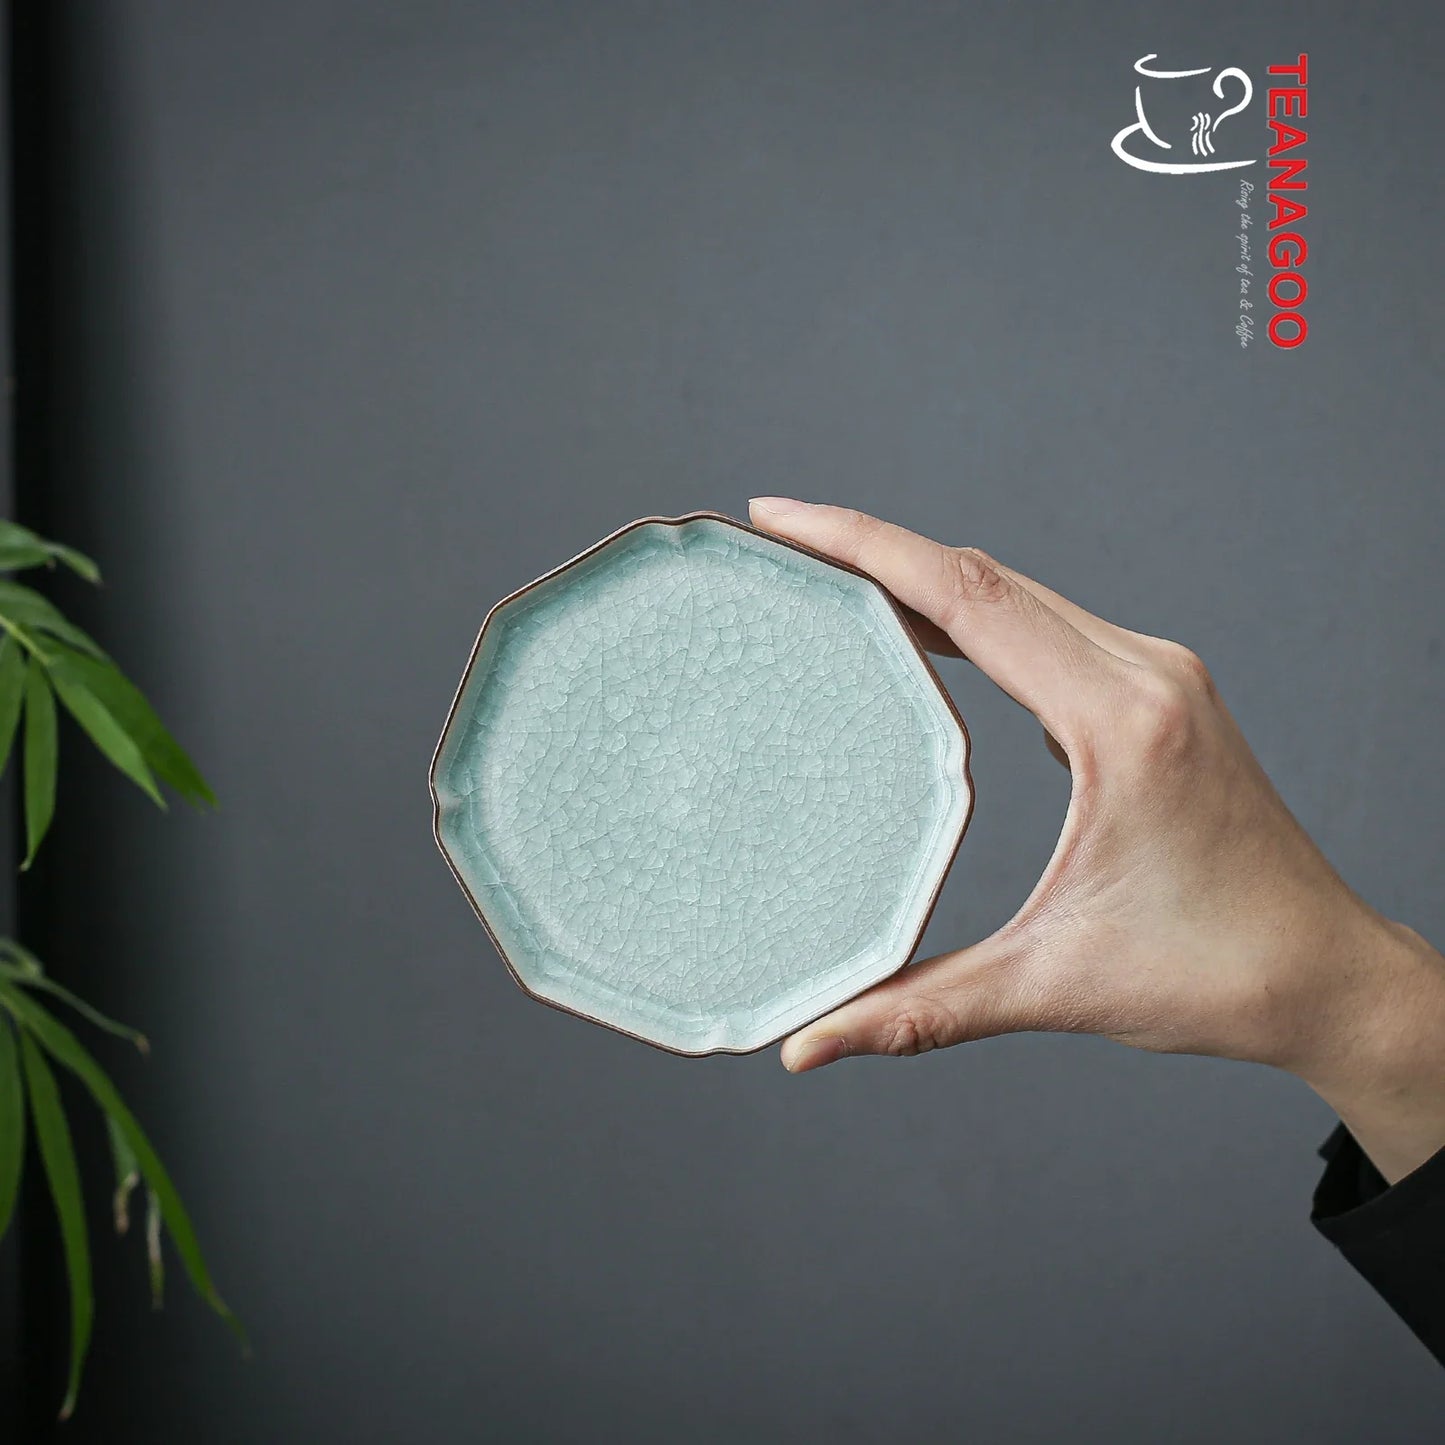 Handmade Ice-cracked Cup Saucer Ceramic Ru Kiln Coaster